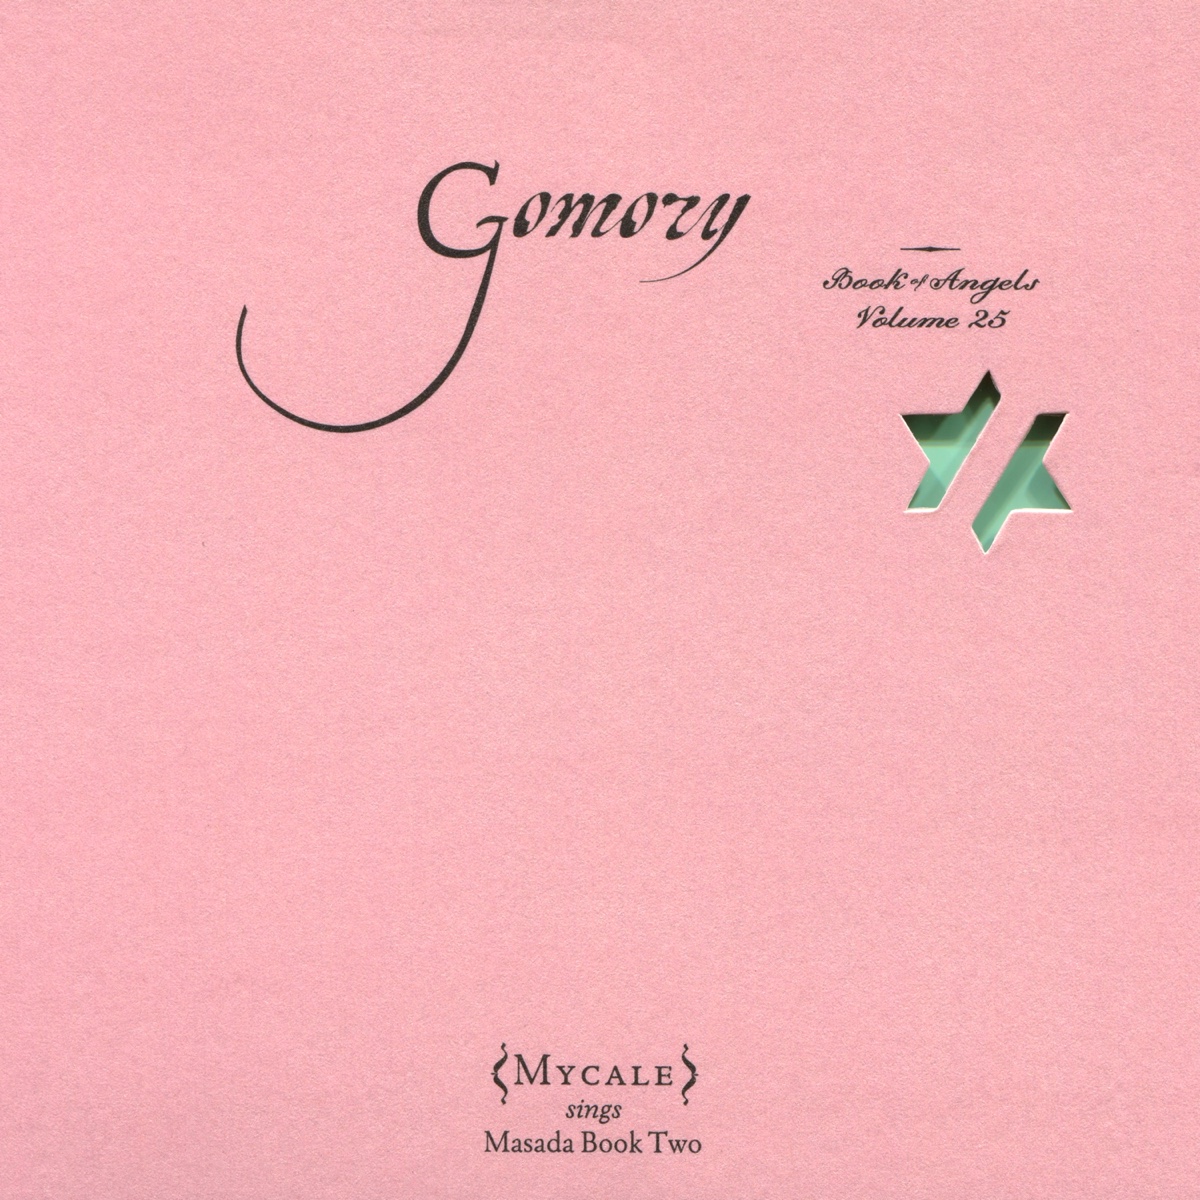 Gomory-- Book of Angels, Vol. 25.jpg